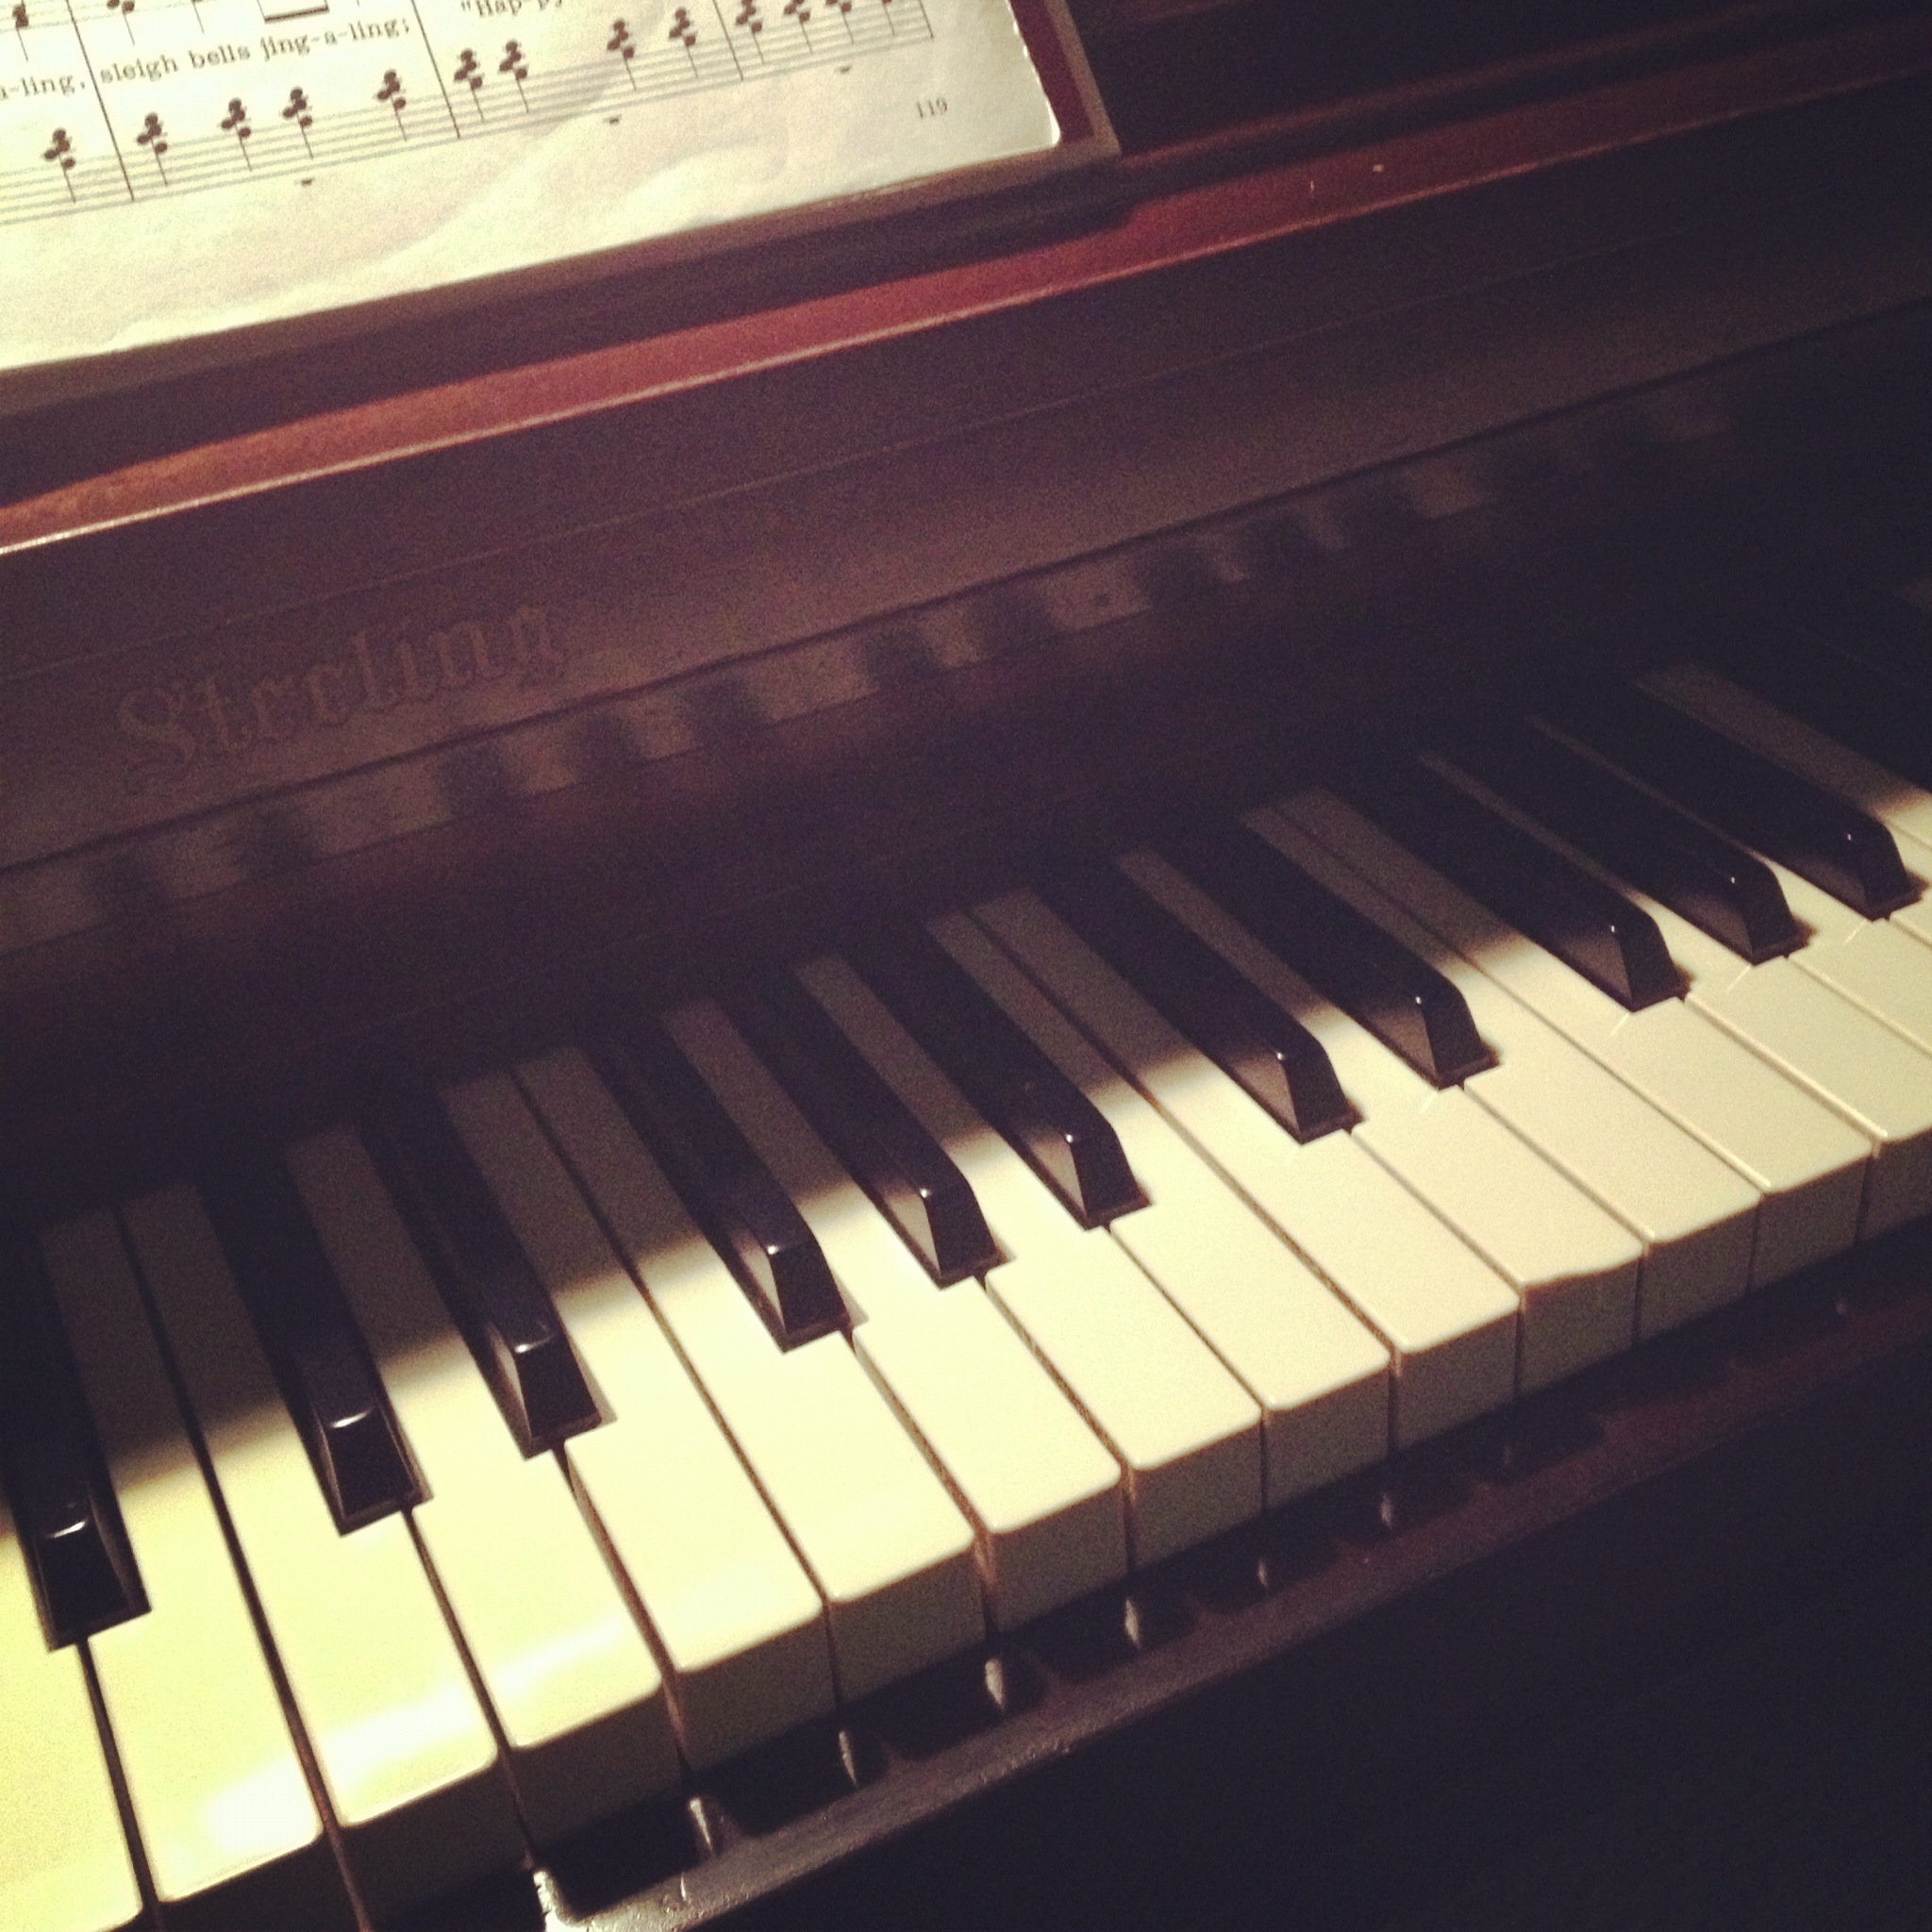 Like a piano sometimes faith needs tuning.